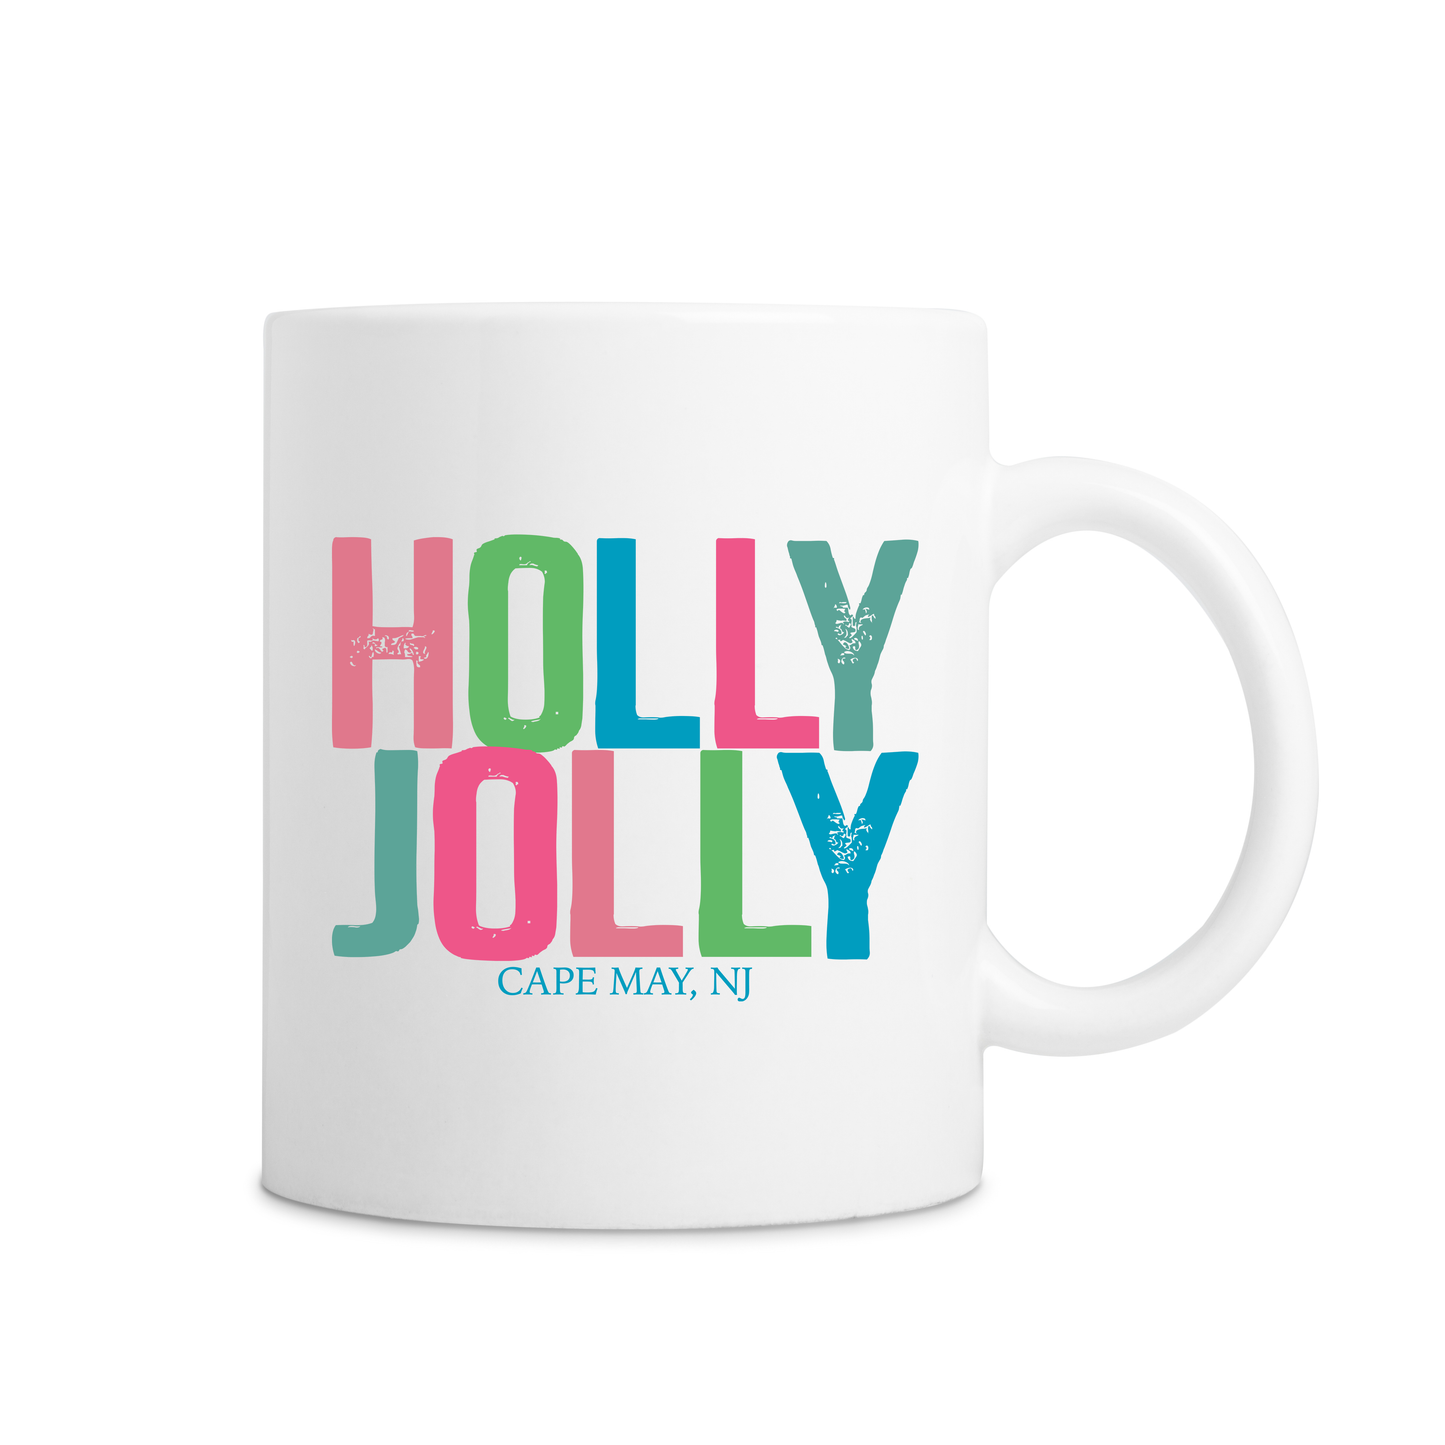 Cape May Colorful Holly Jolly Mug - White